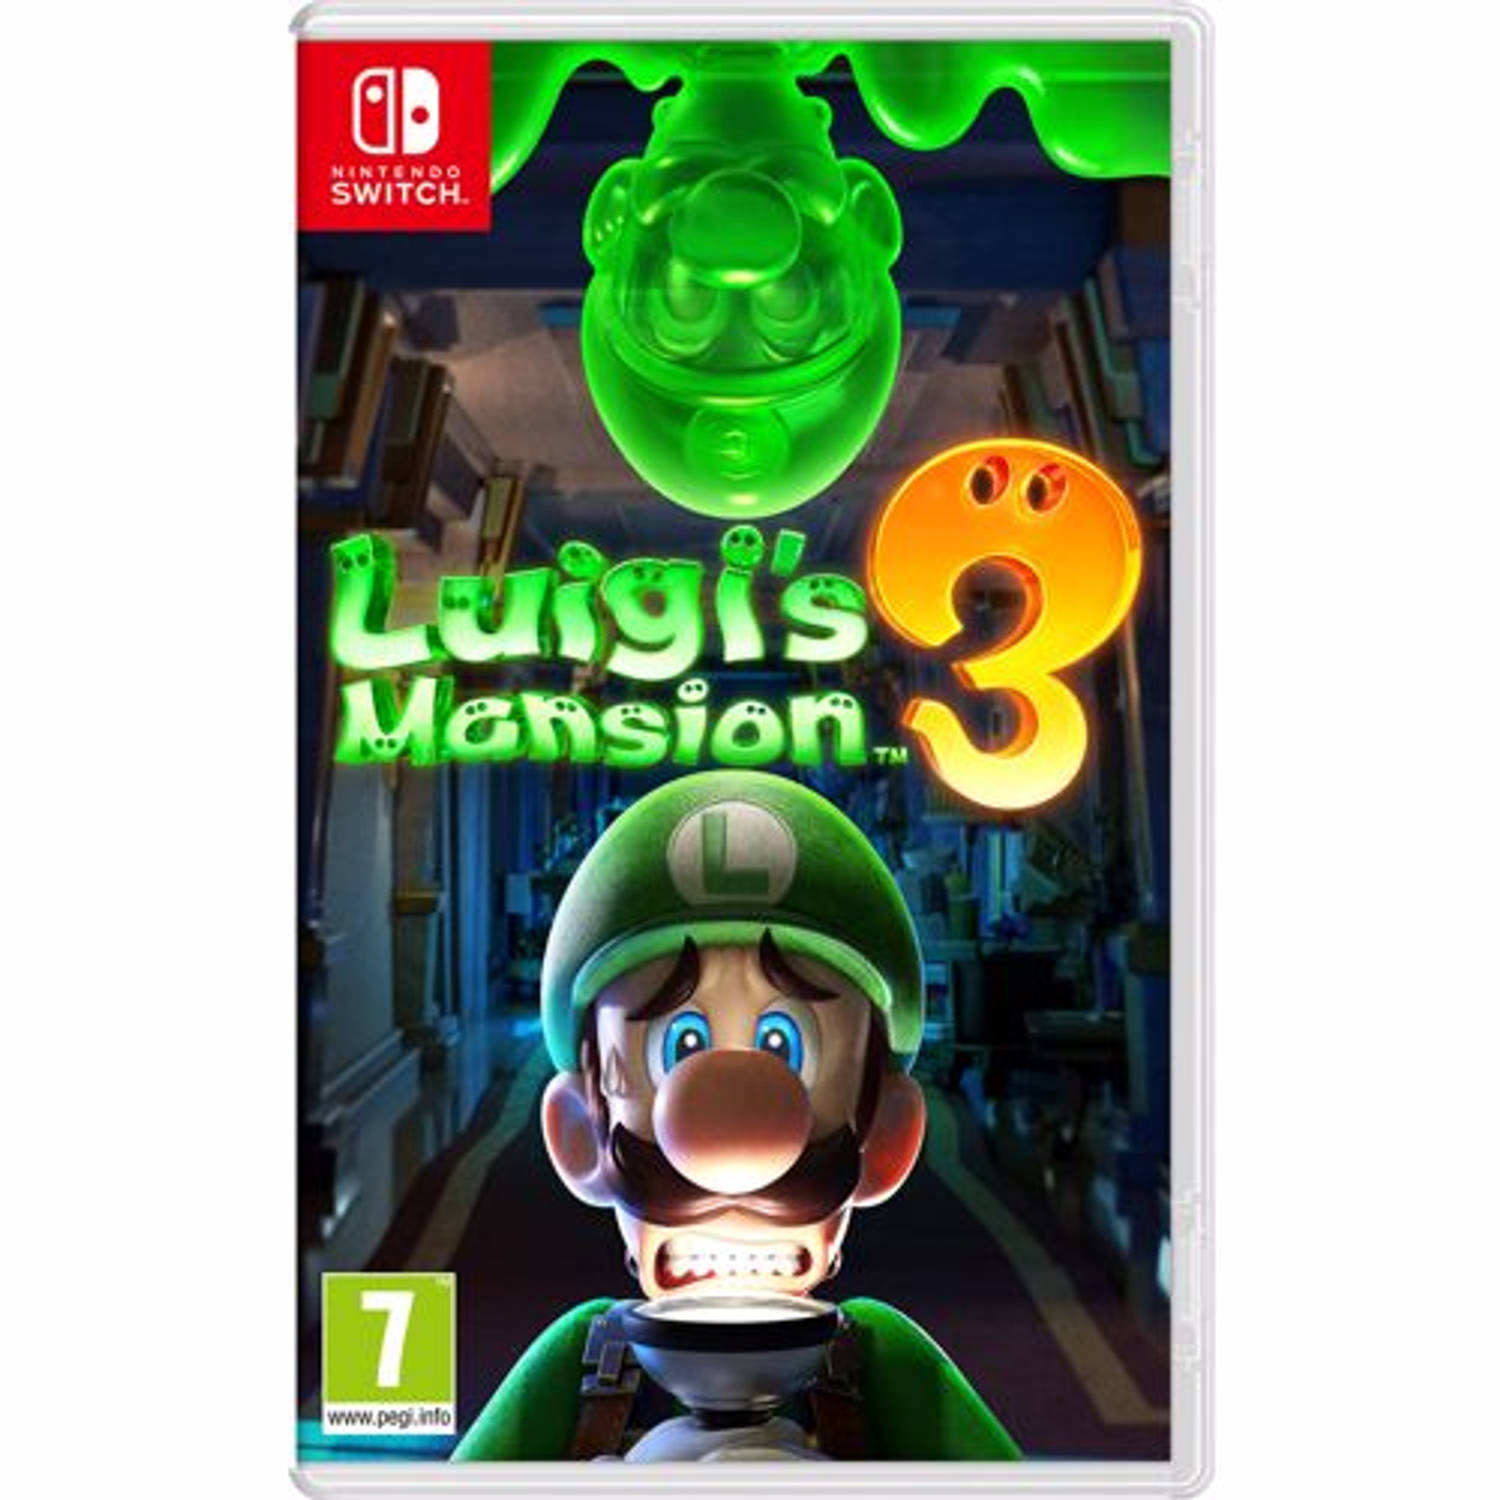 Luigi's mansion 3, (Nintendo Switch). SWITCH